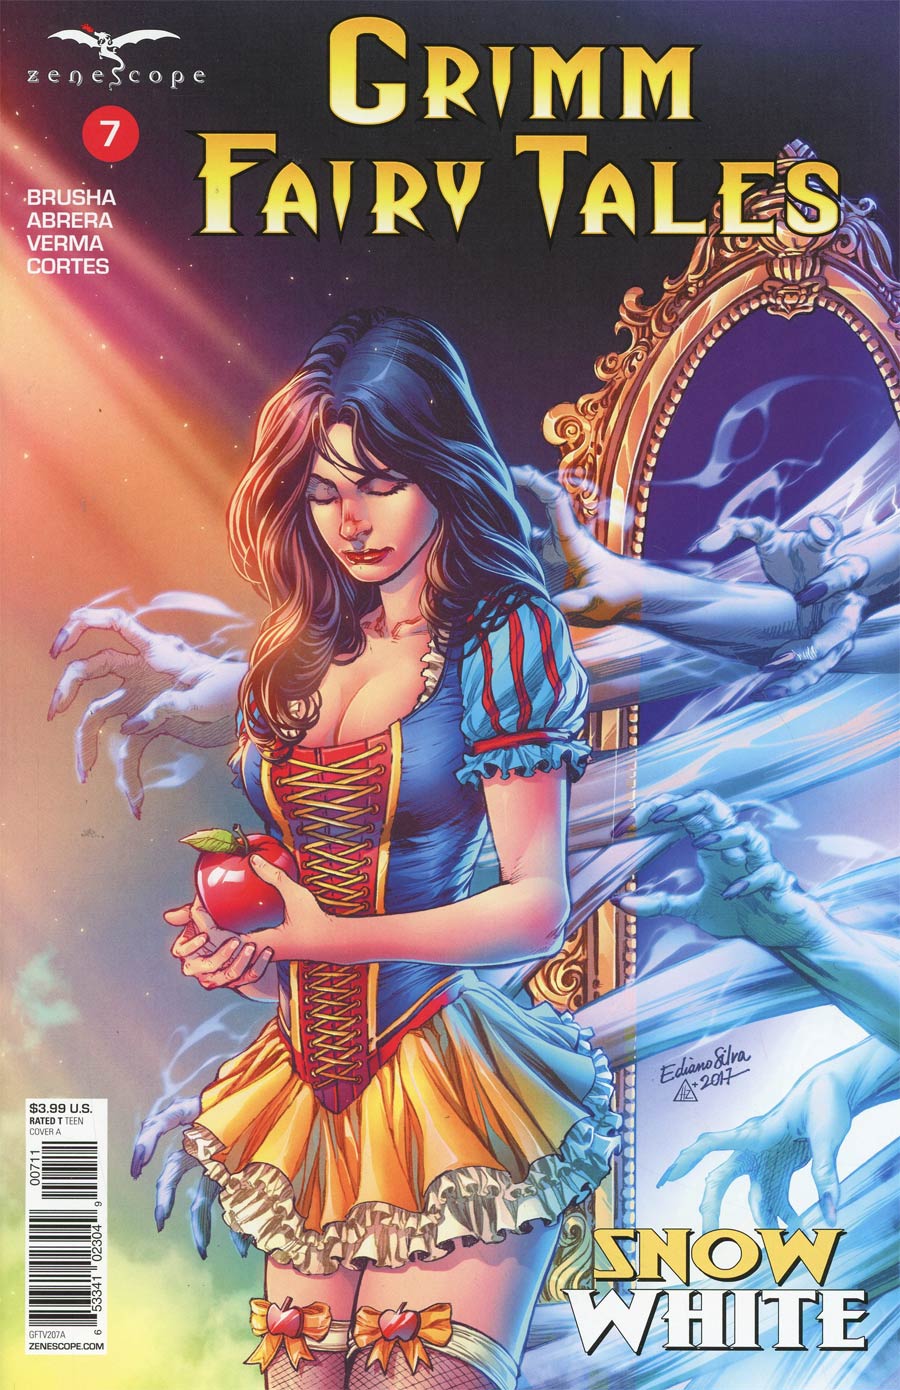 Grimm Fairy Tales Vol 2 #7 Cover A Ediano Silva